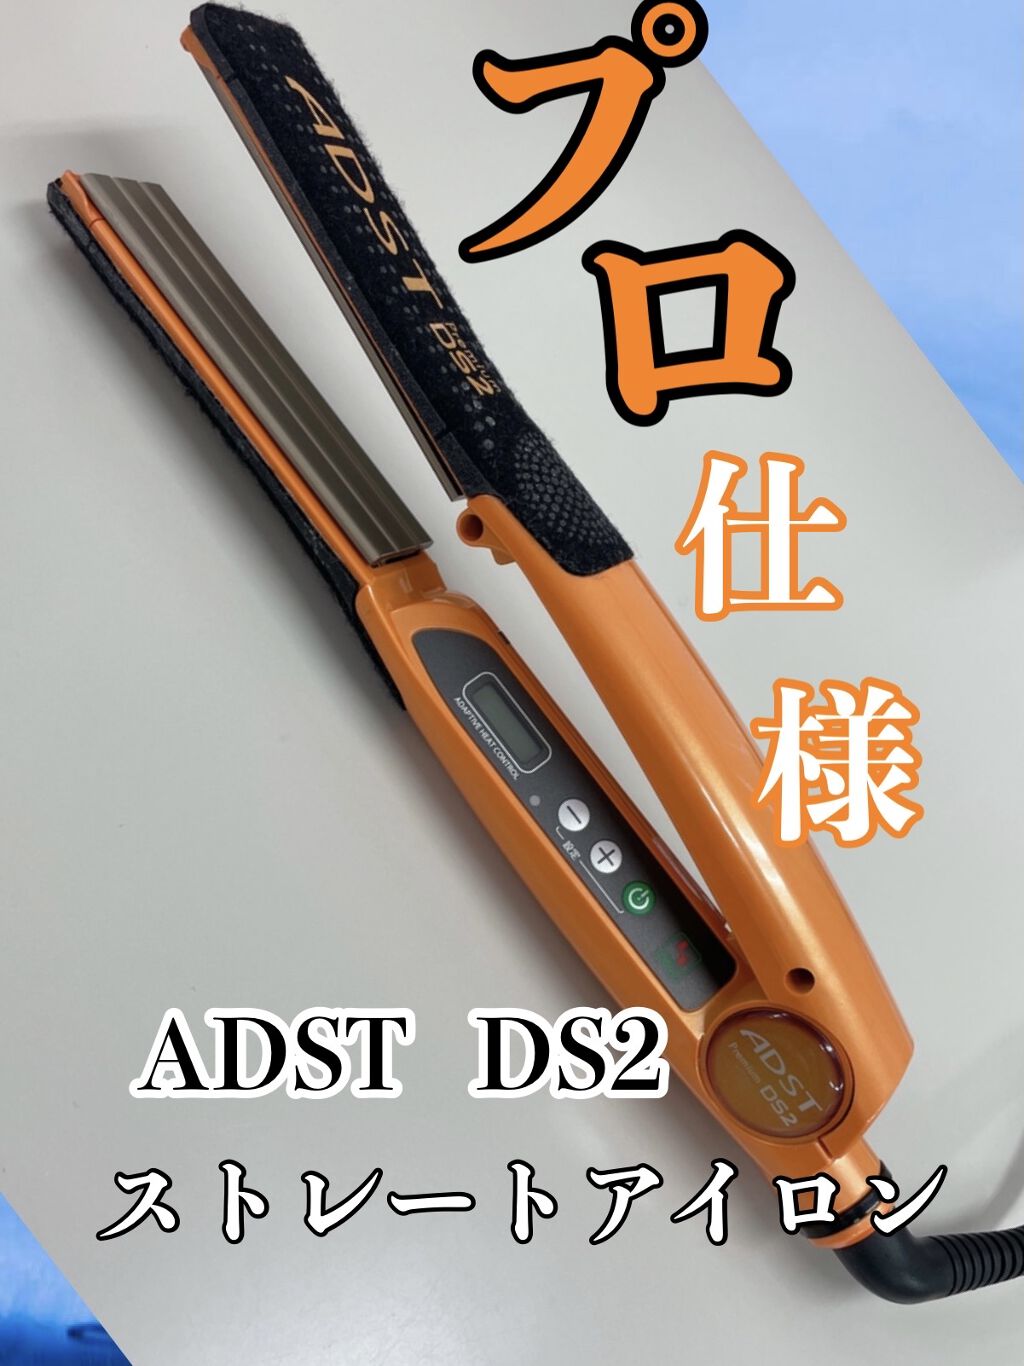 DS2 アドストプレミアム ADST Premium DS2 FDS2-25 - ヘアアイロン